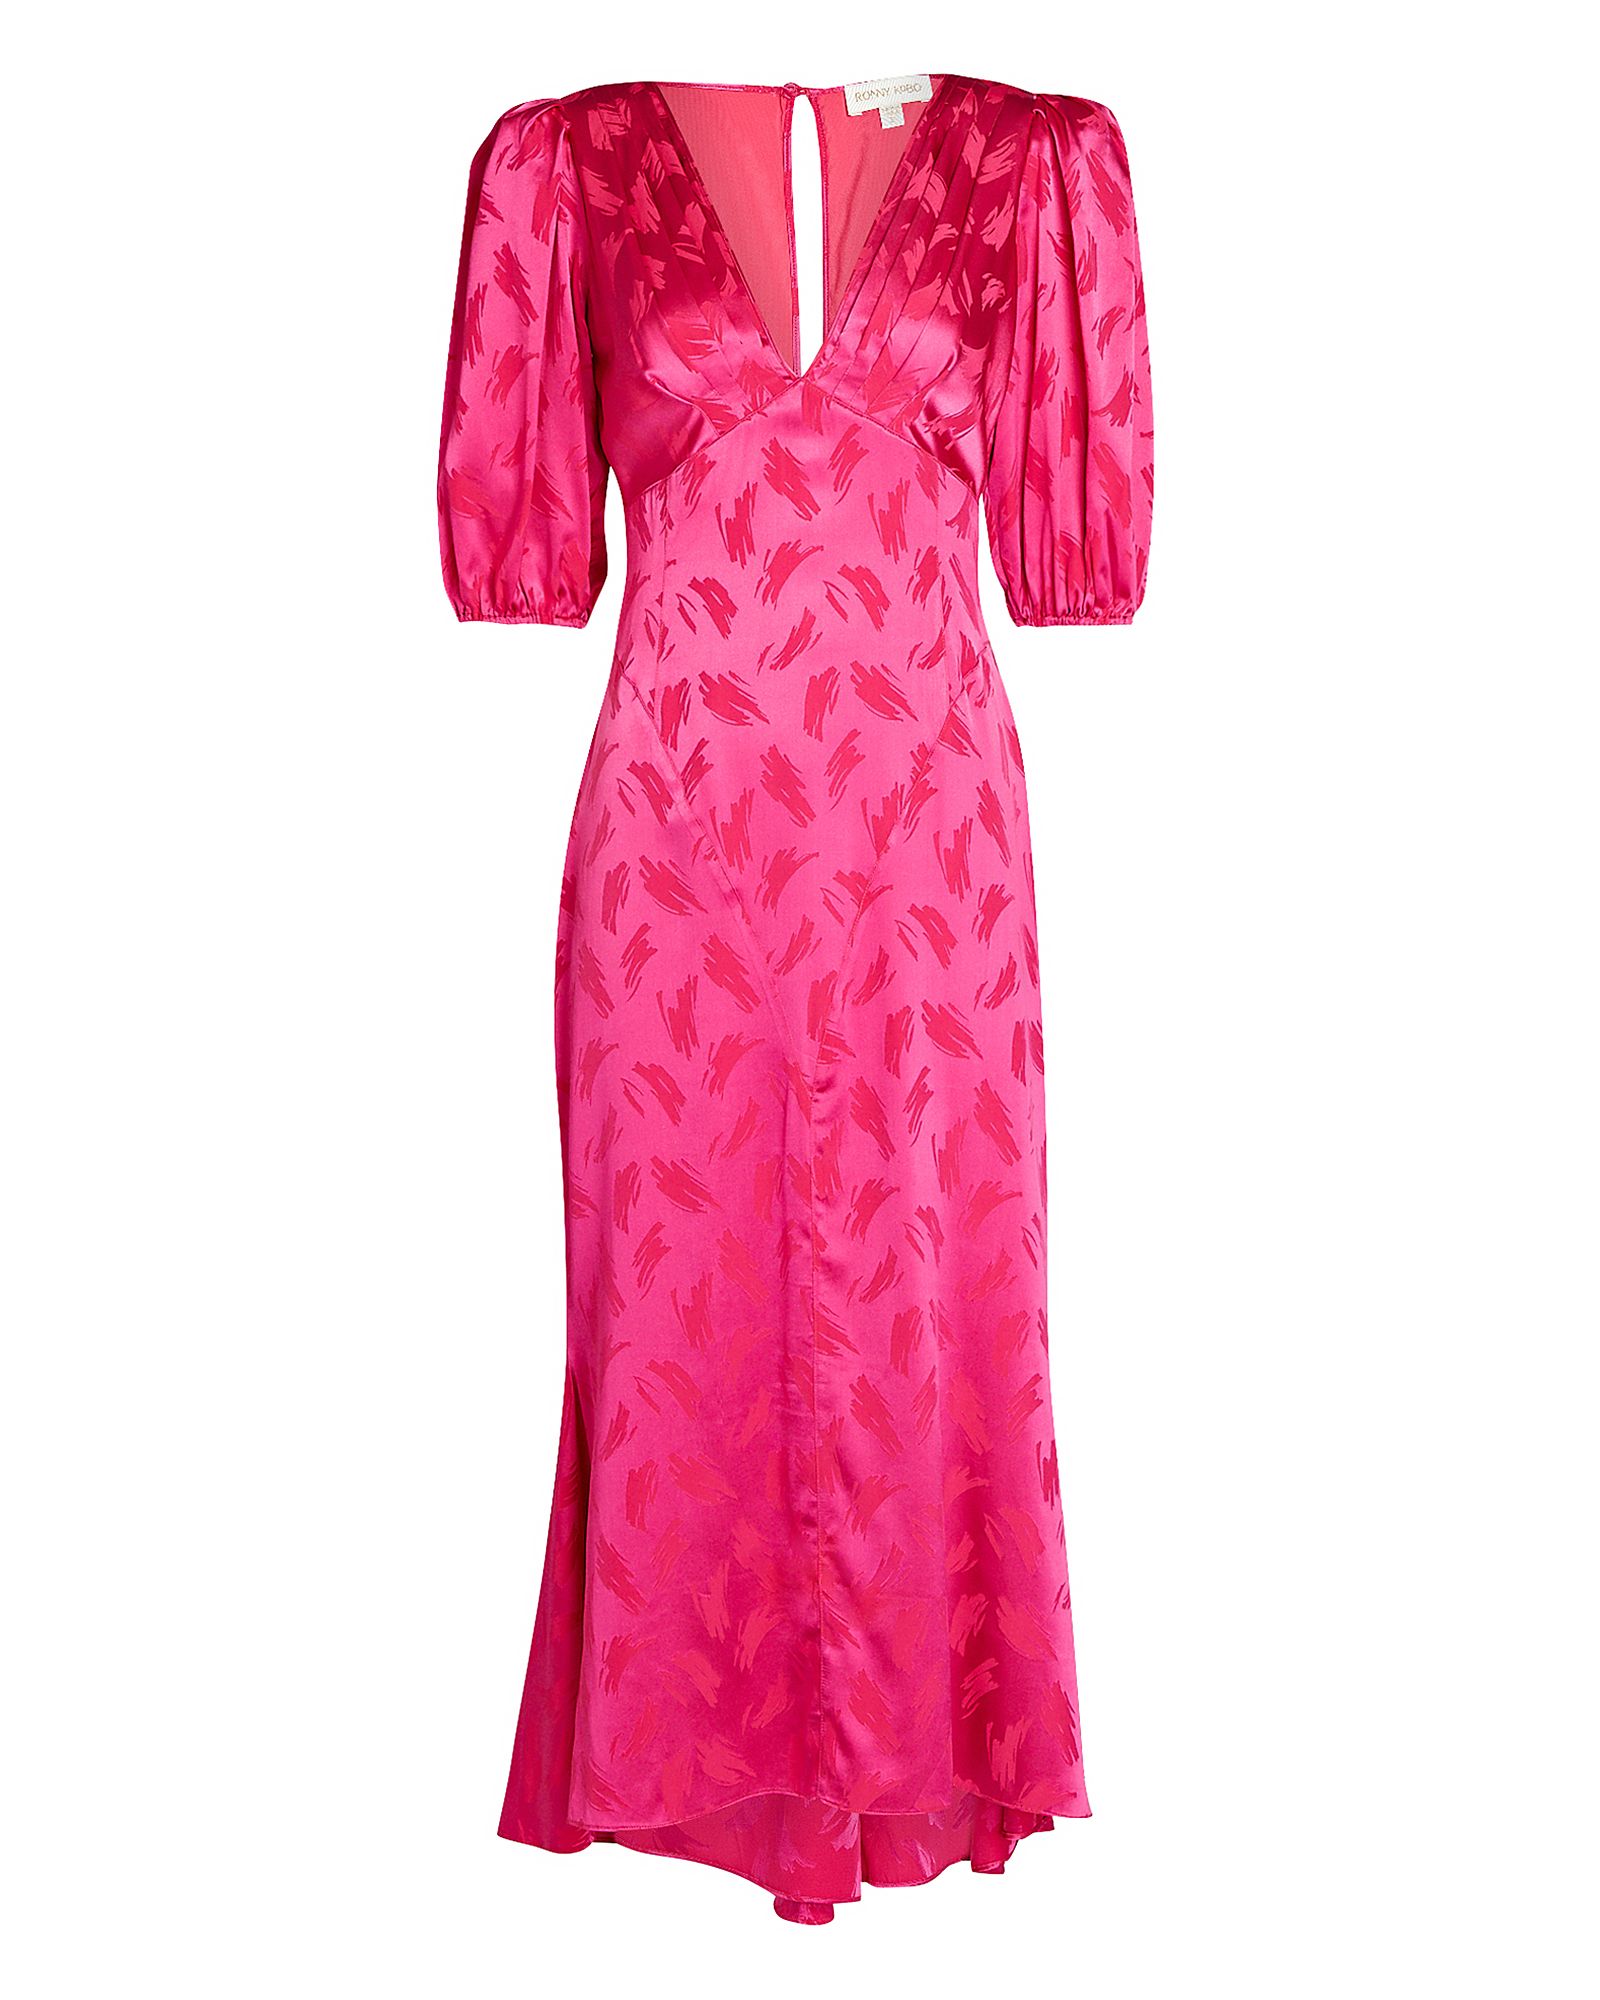 Ronny Kobo Teresa Jacquard Midi Dress, Pink-Drk S | INTERMIX